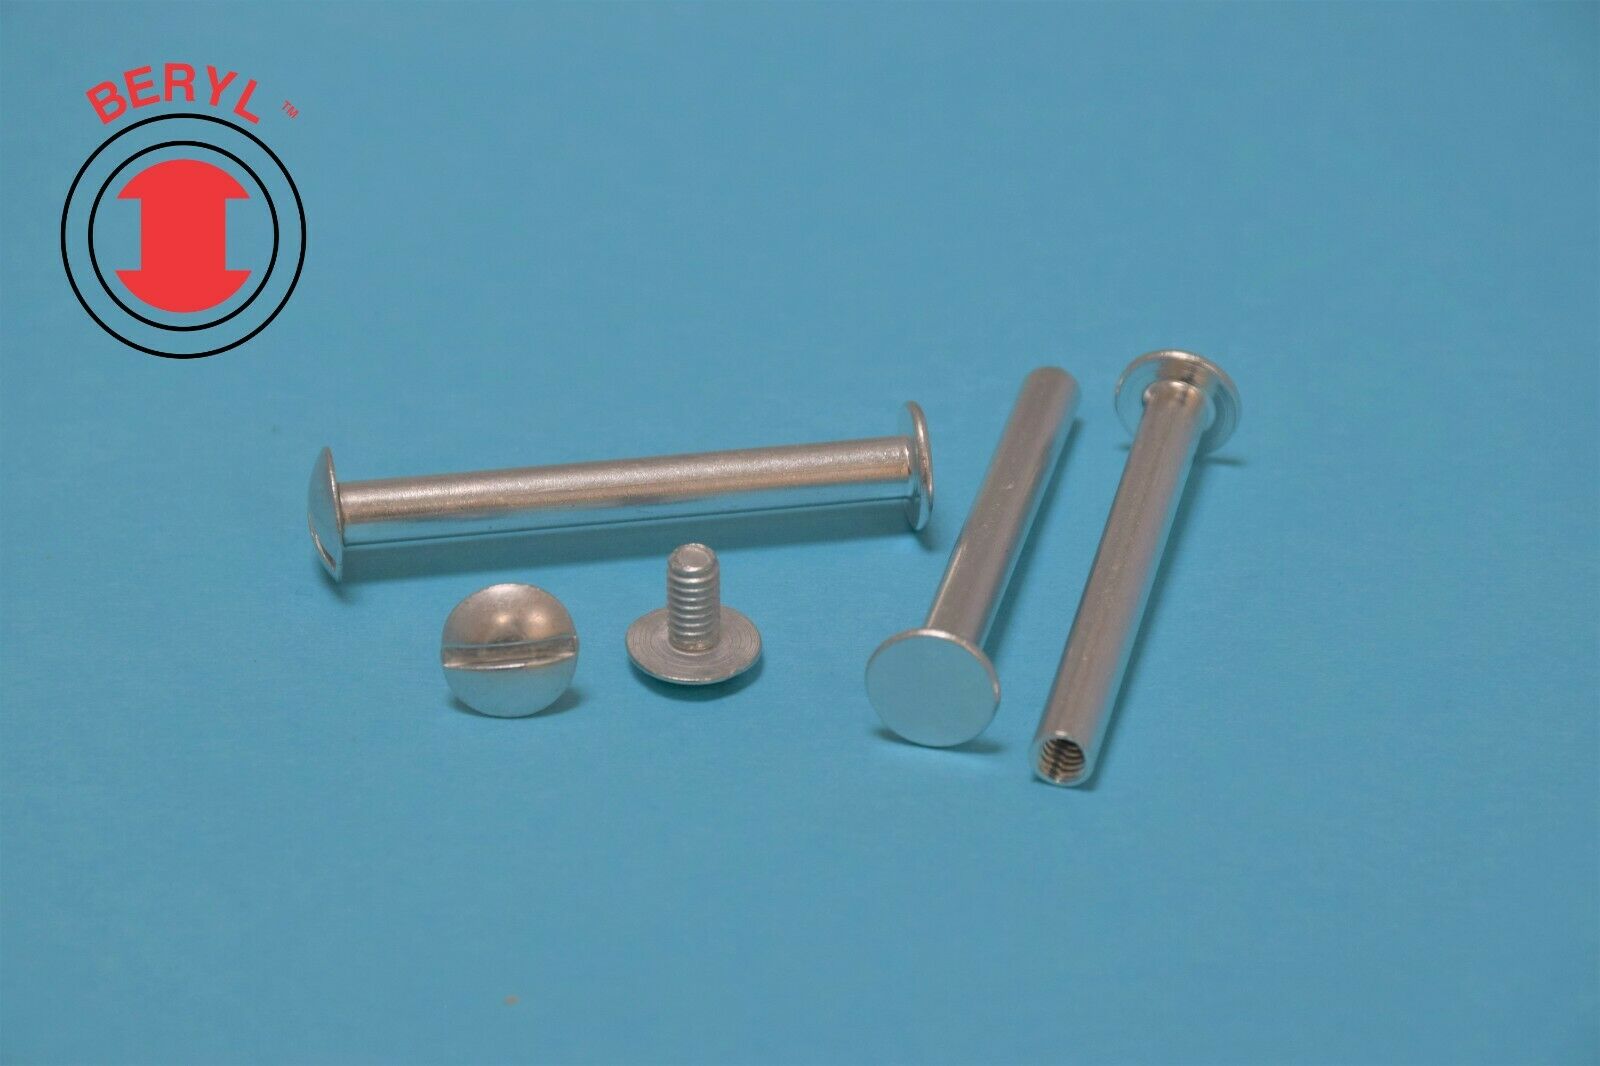 Aluminum Binding Post / Screw / Chicago Binder Screw / Post #8-32 X 1/2" 50sets